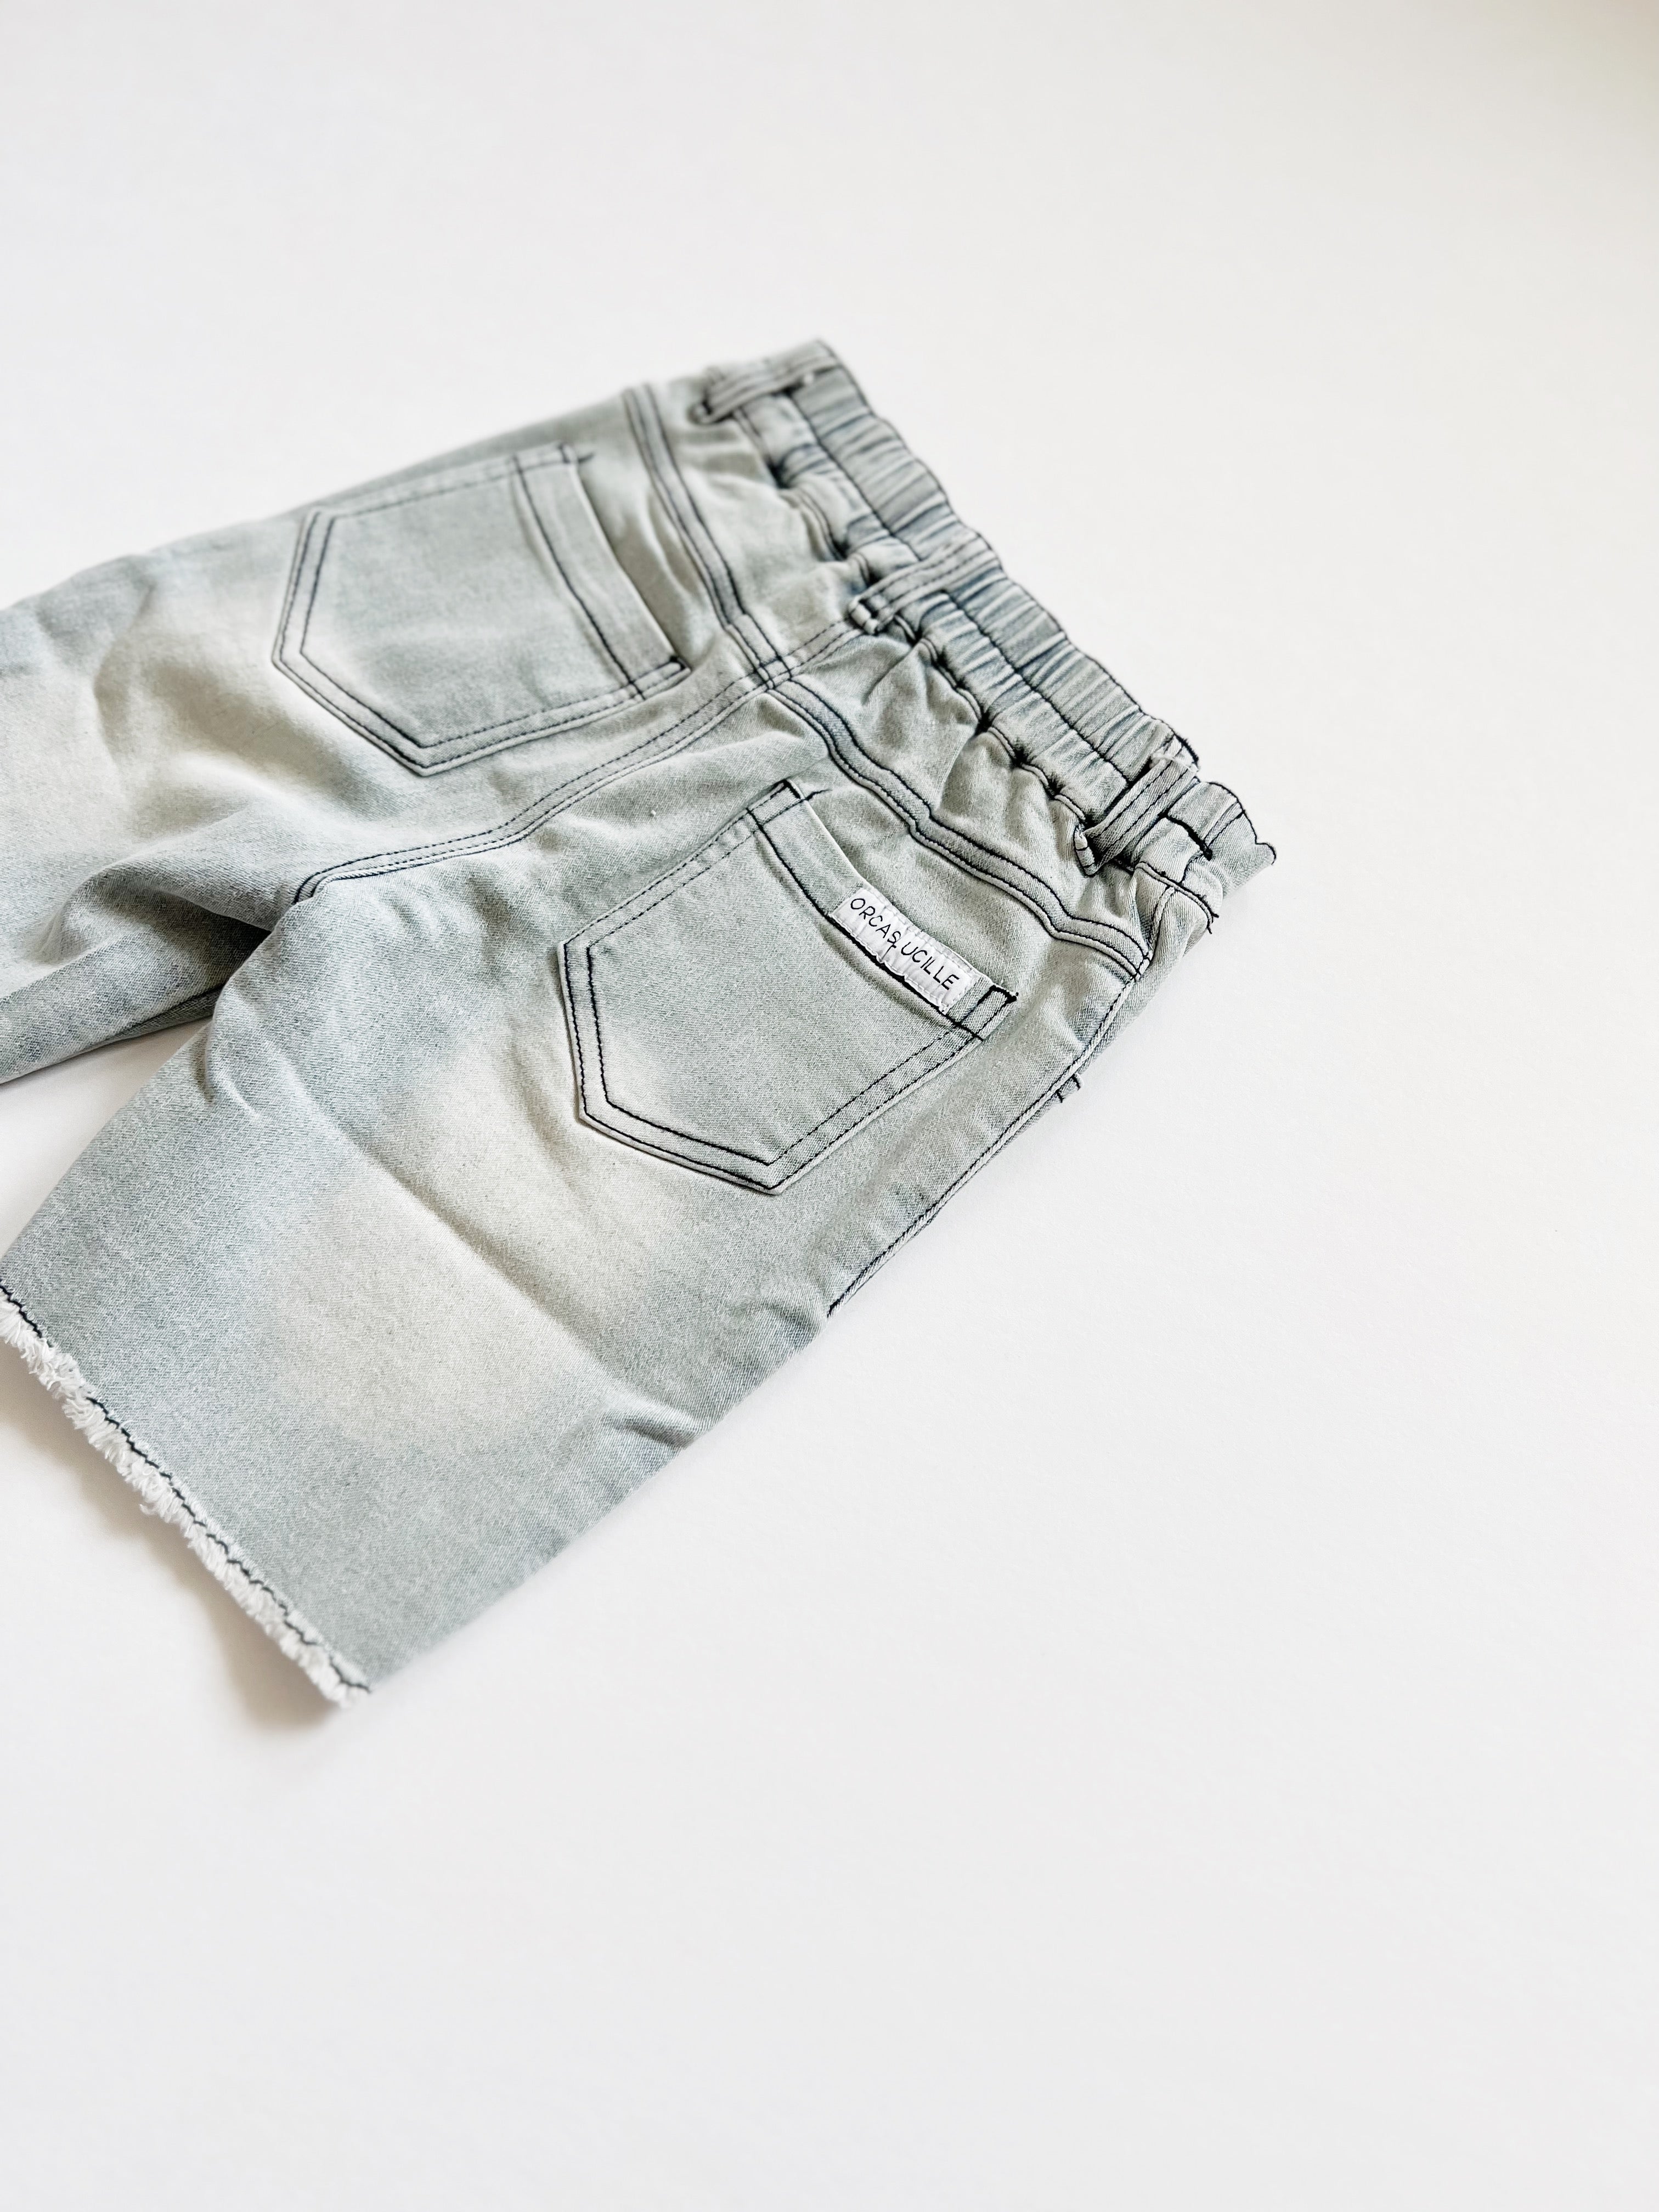 Bermuda Denim Shorts - Slate Gray